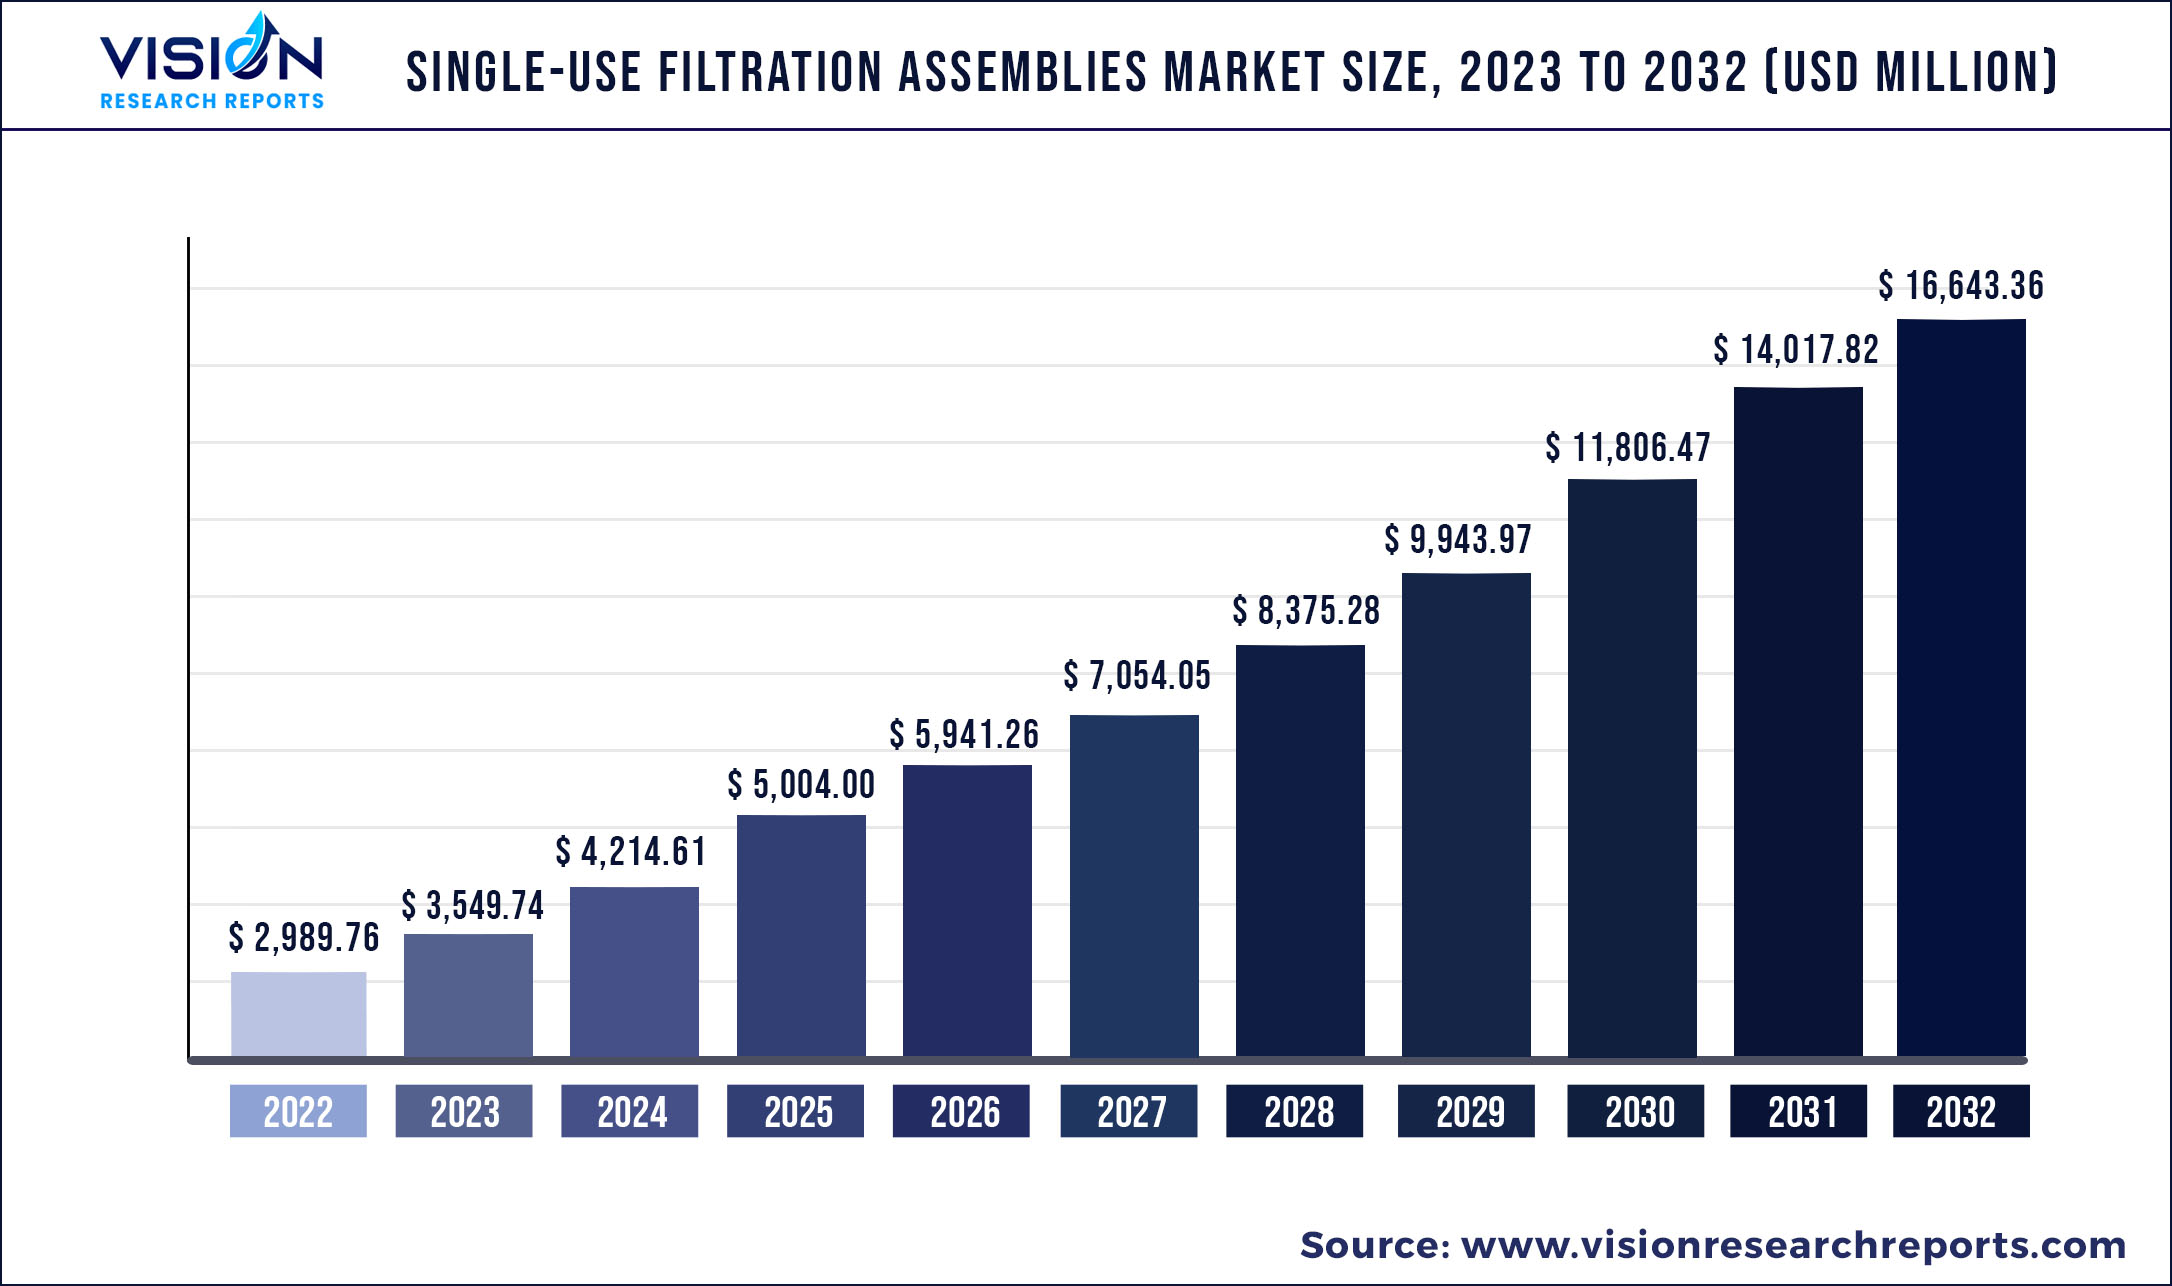 Single-use Filtration Assemblies Market Size 2023 to 2032